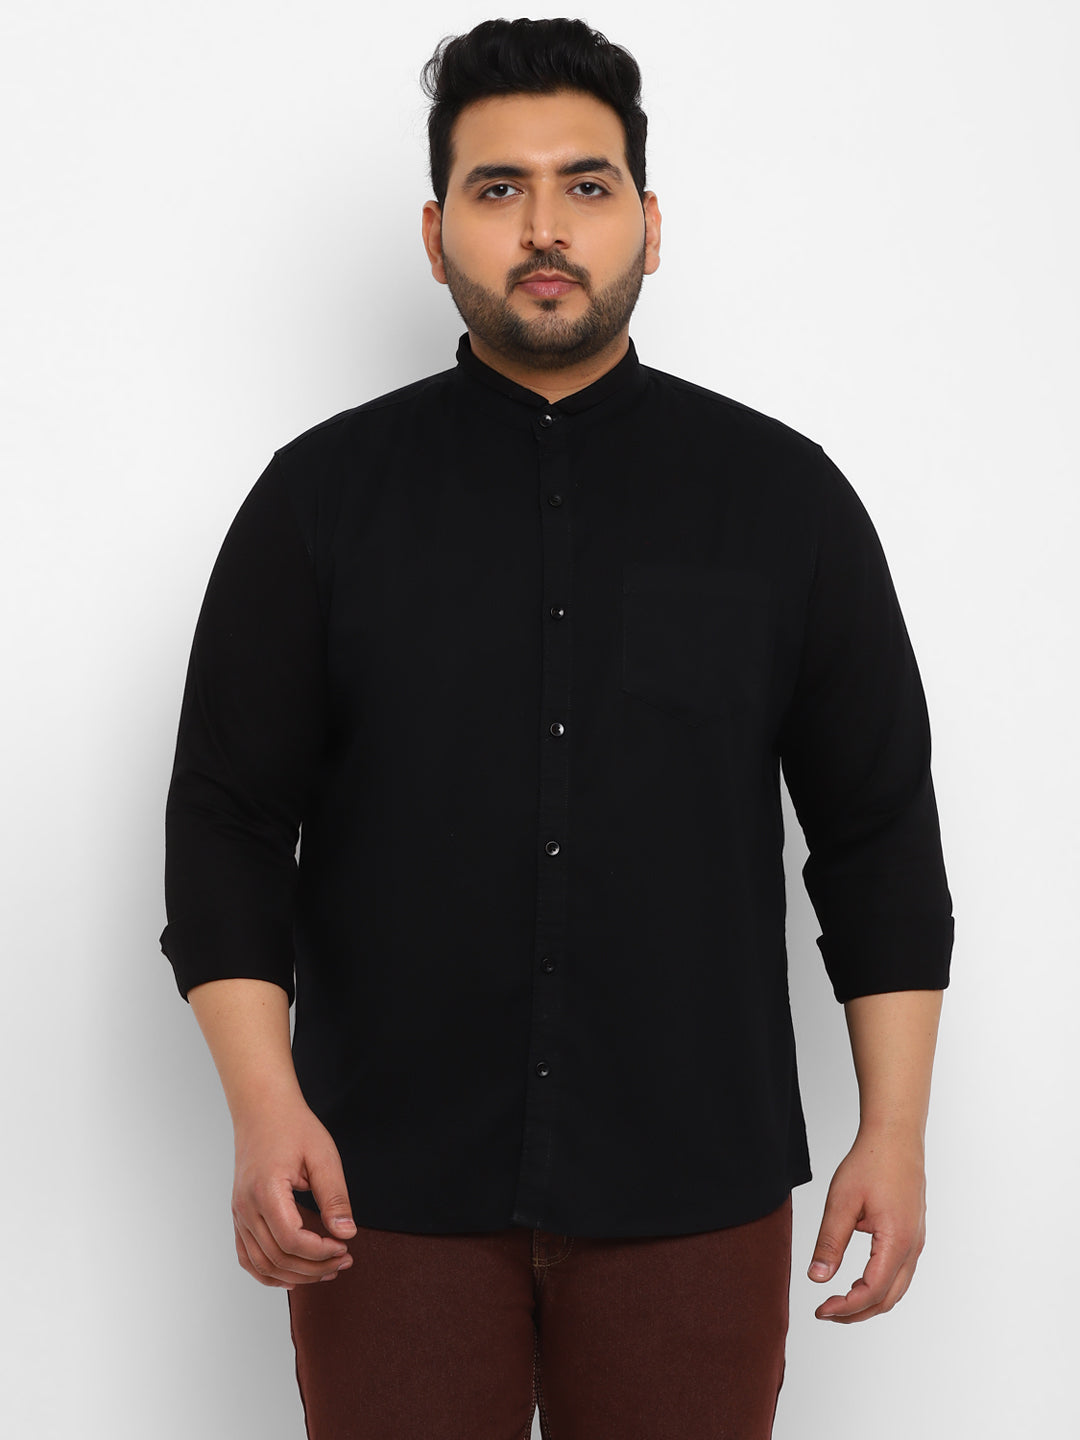 Plus Men's Black Cotton Full Sleeve Regular Fit Casual Solid Shirt with Mandarin Collar